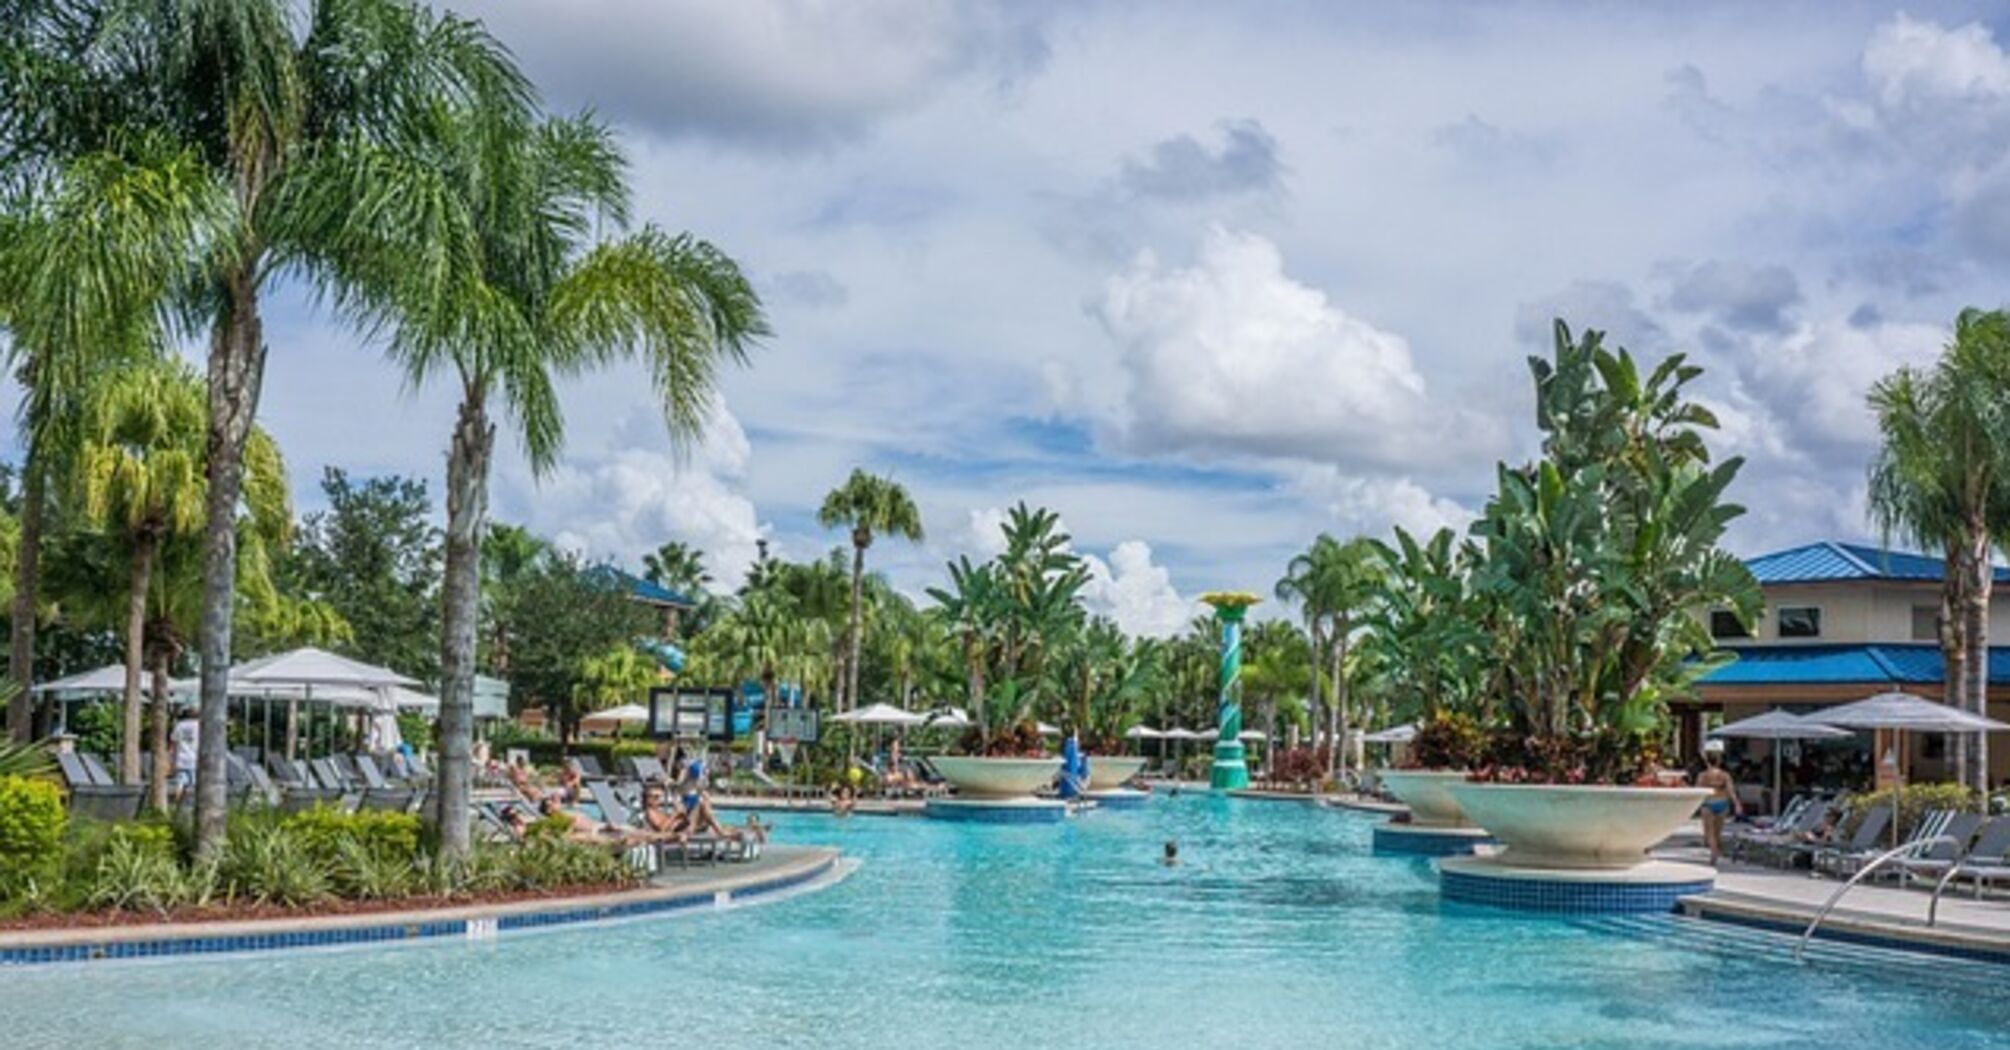 Best resorts in Florida